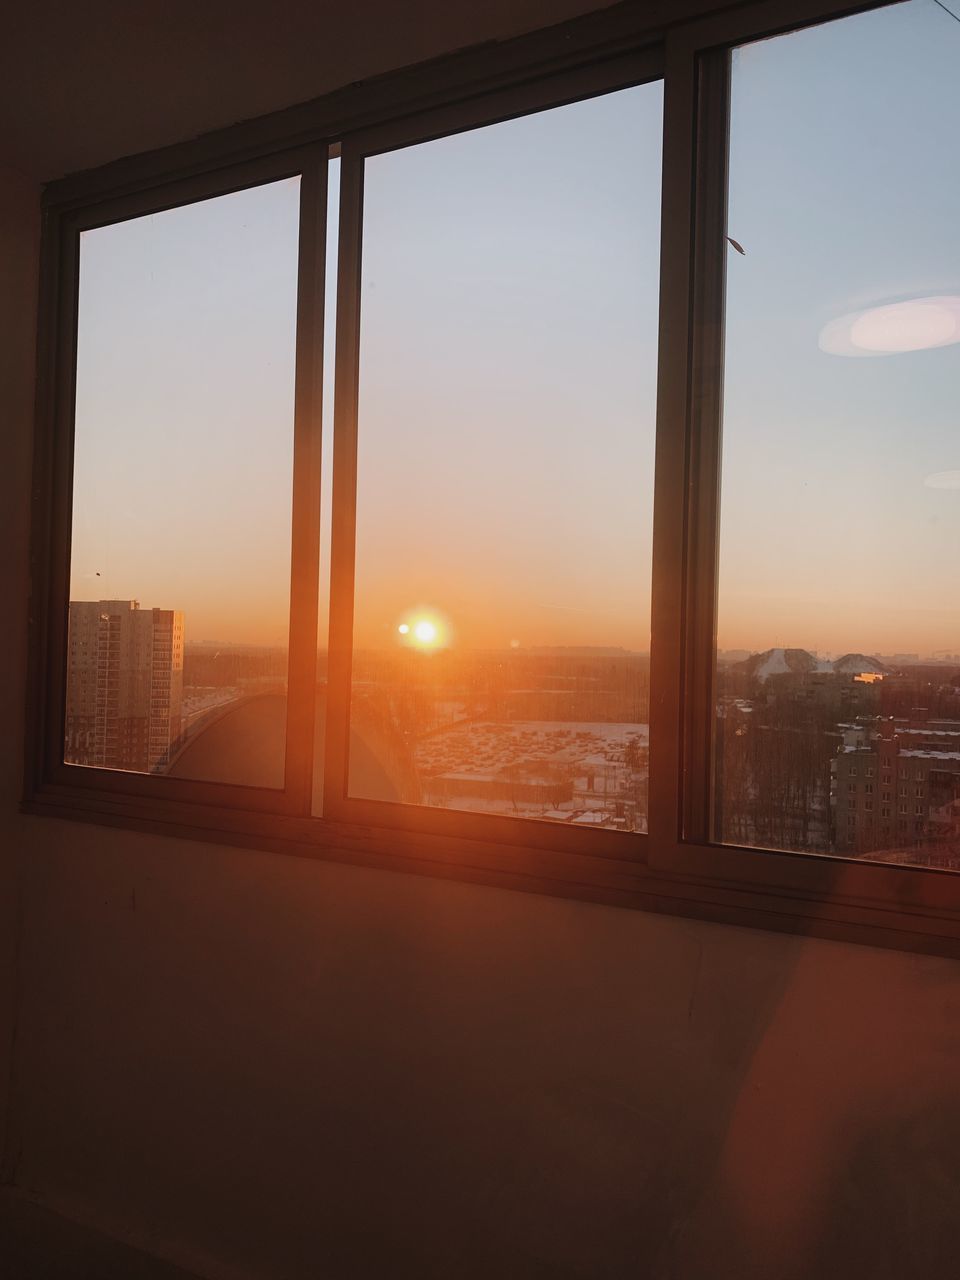 SCENIC VIEW OF SUNSET SEEN THROUGH WINDOW